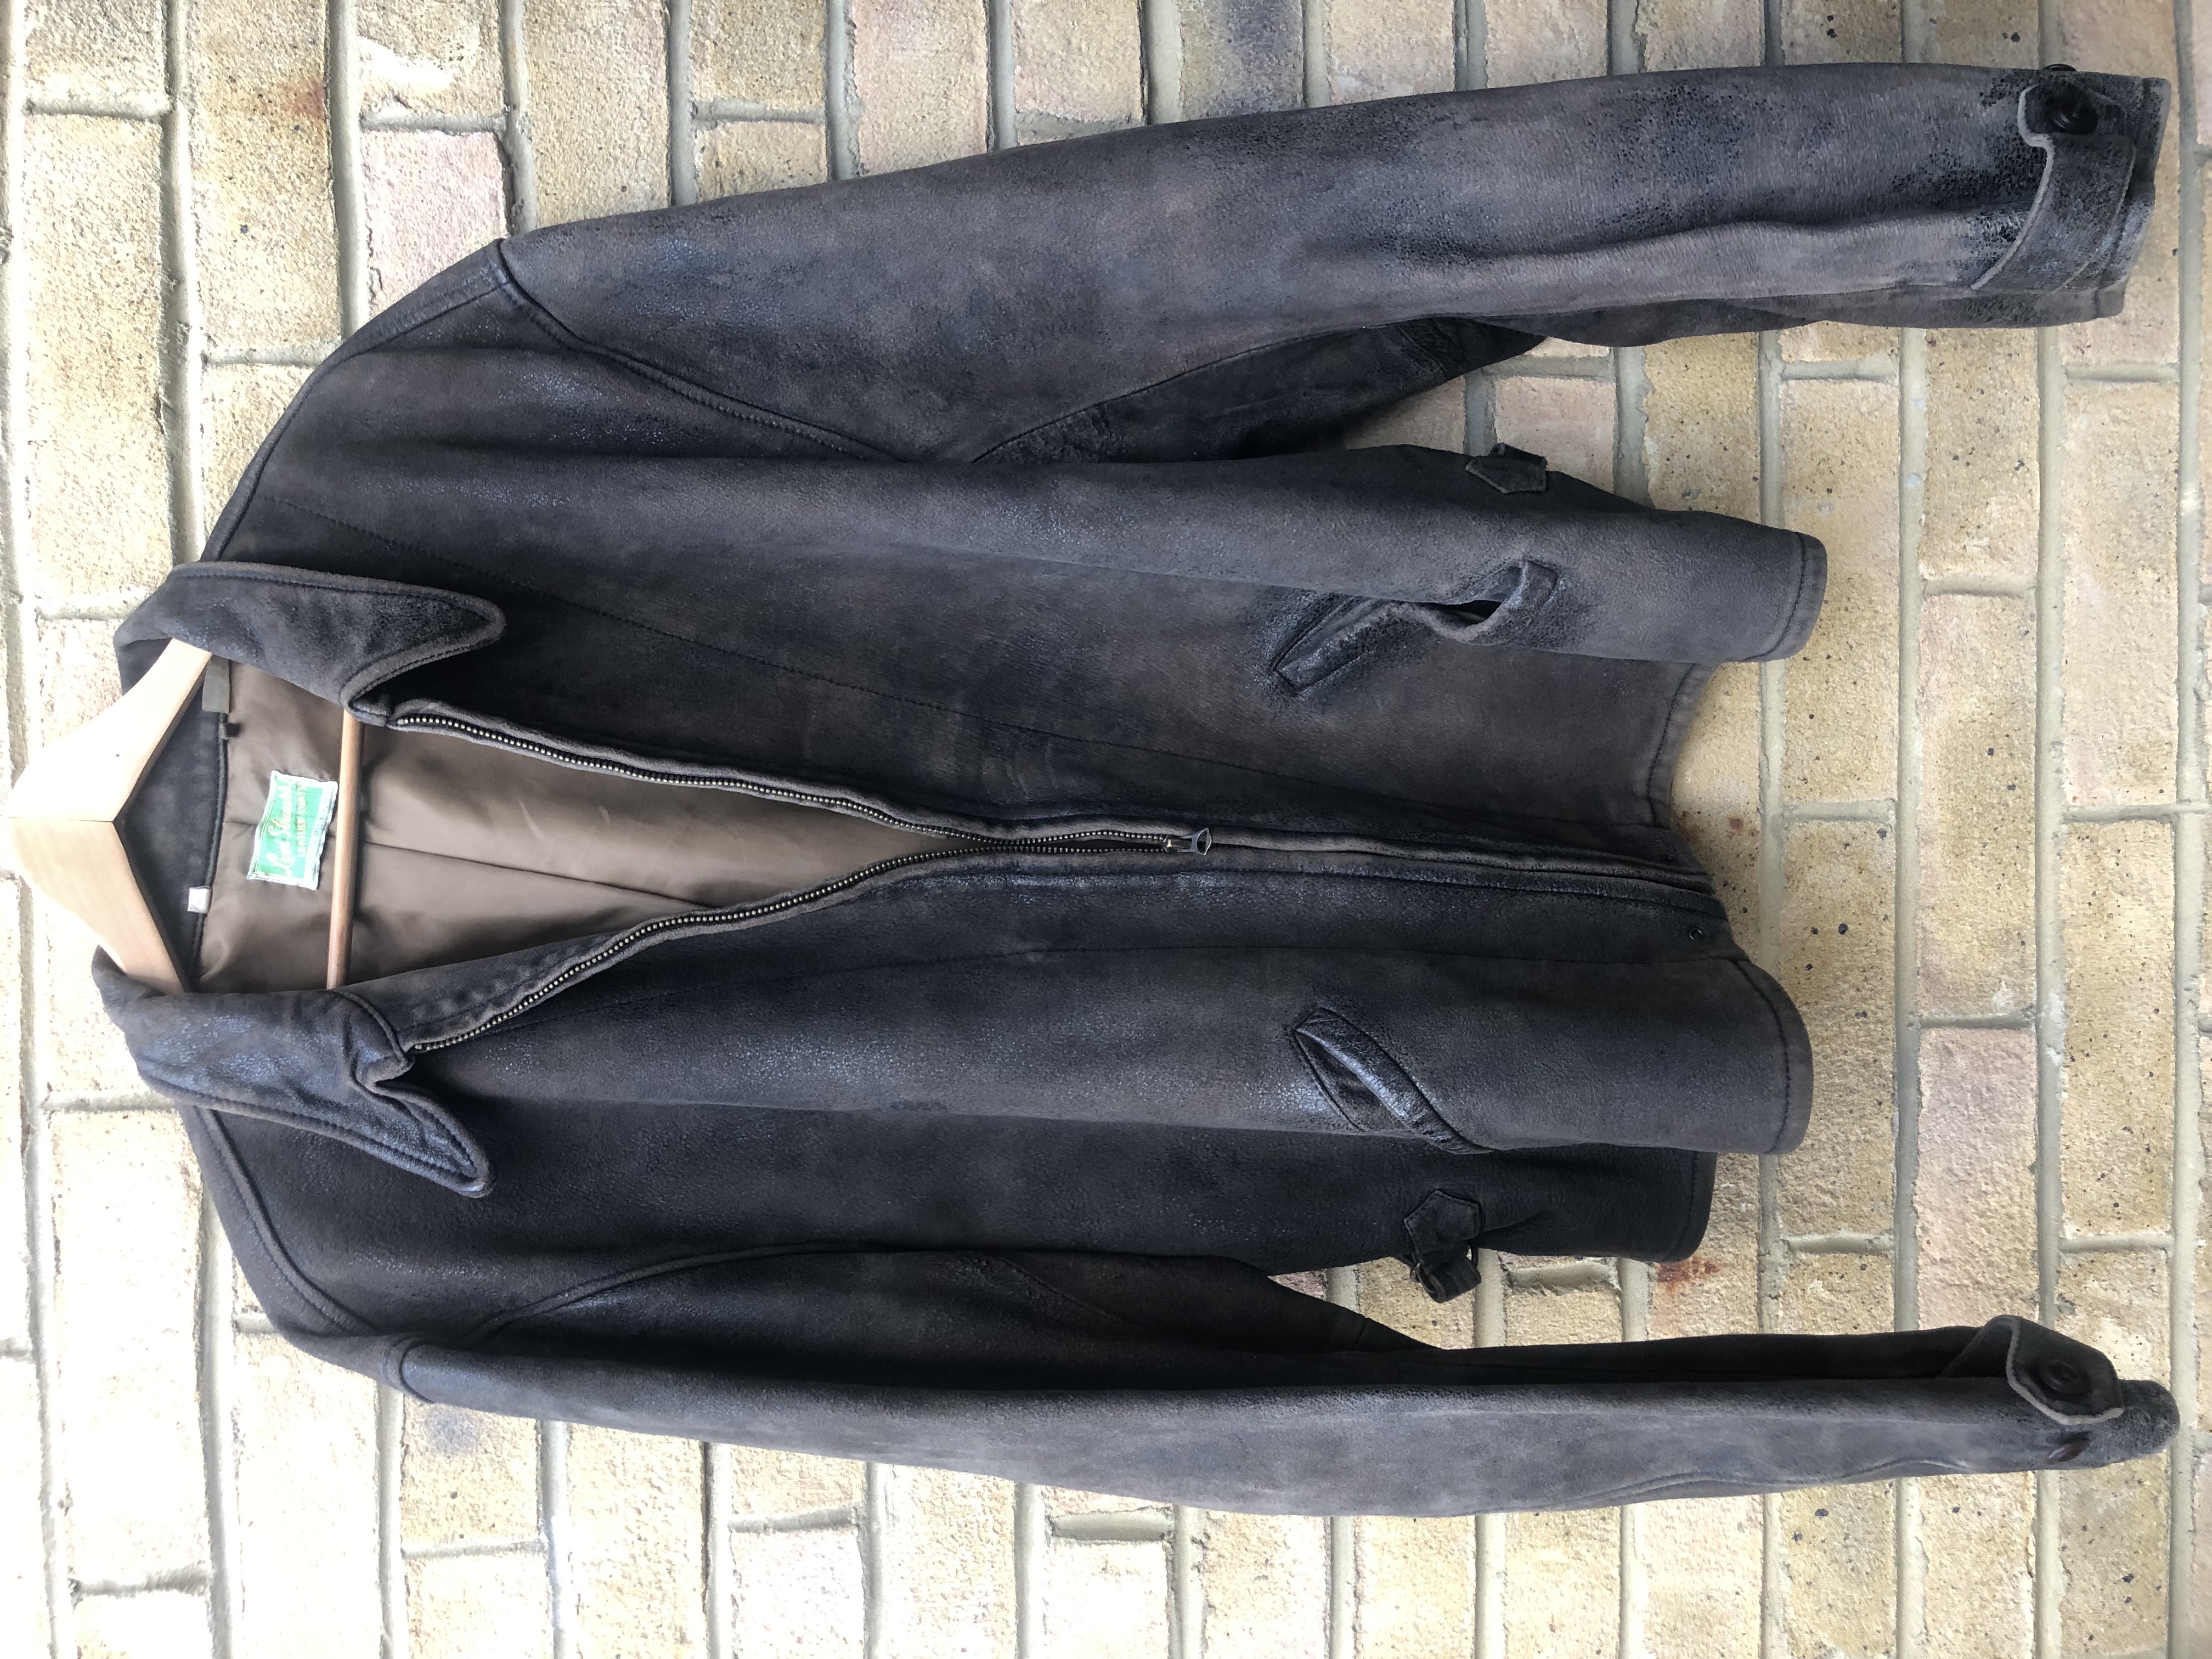 LVC LEVIS VINTAGE CLOTHING SUNSET MENLO JAMES BOND SKYFALL LEATHER JACKET  1930s REPRODUCTION